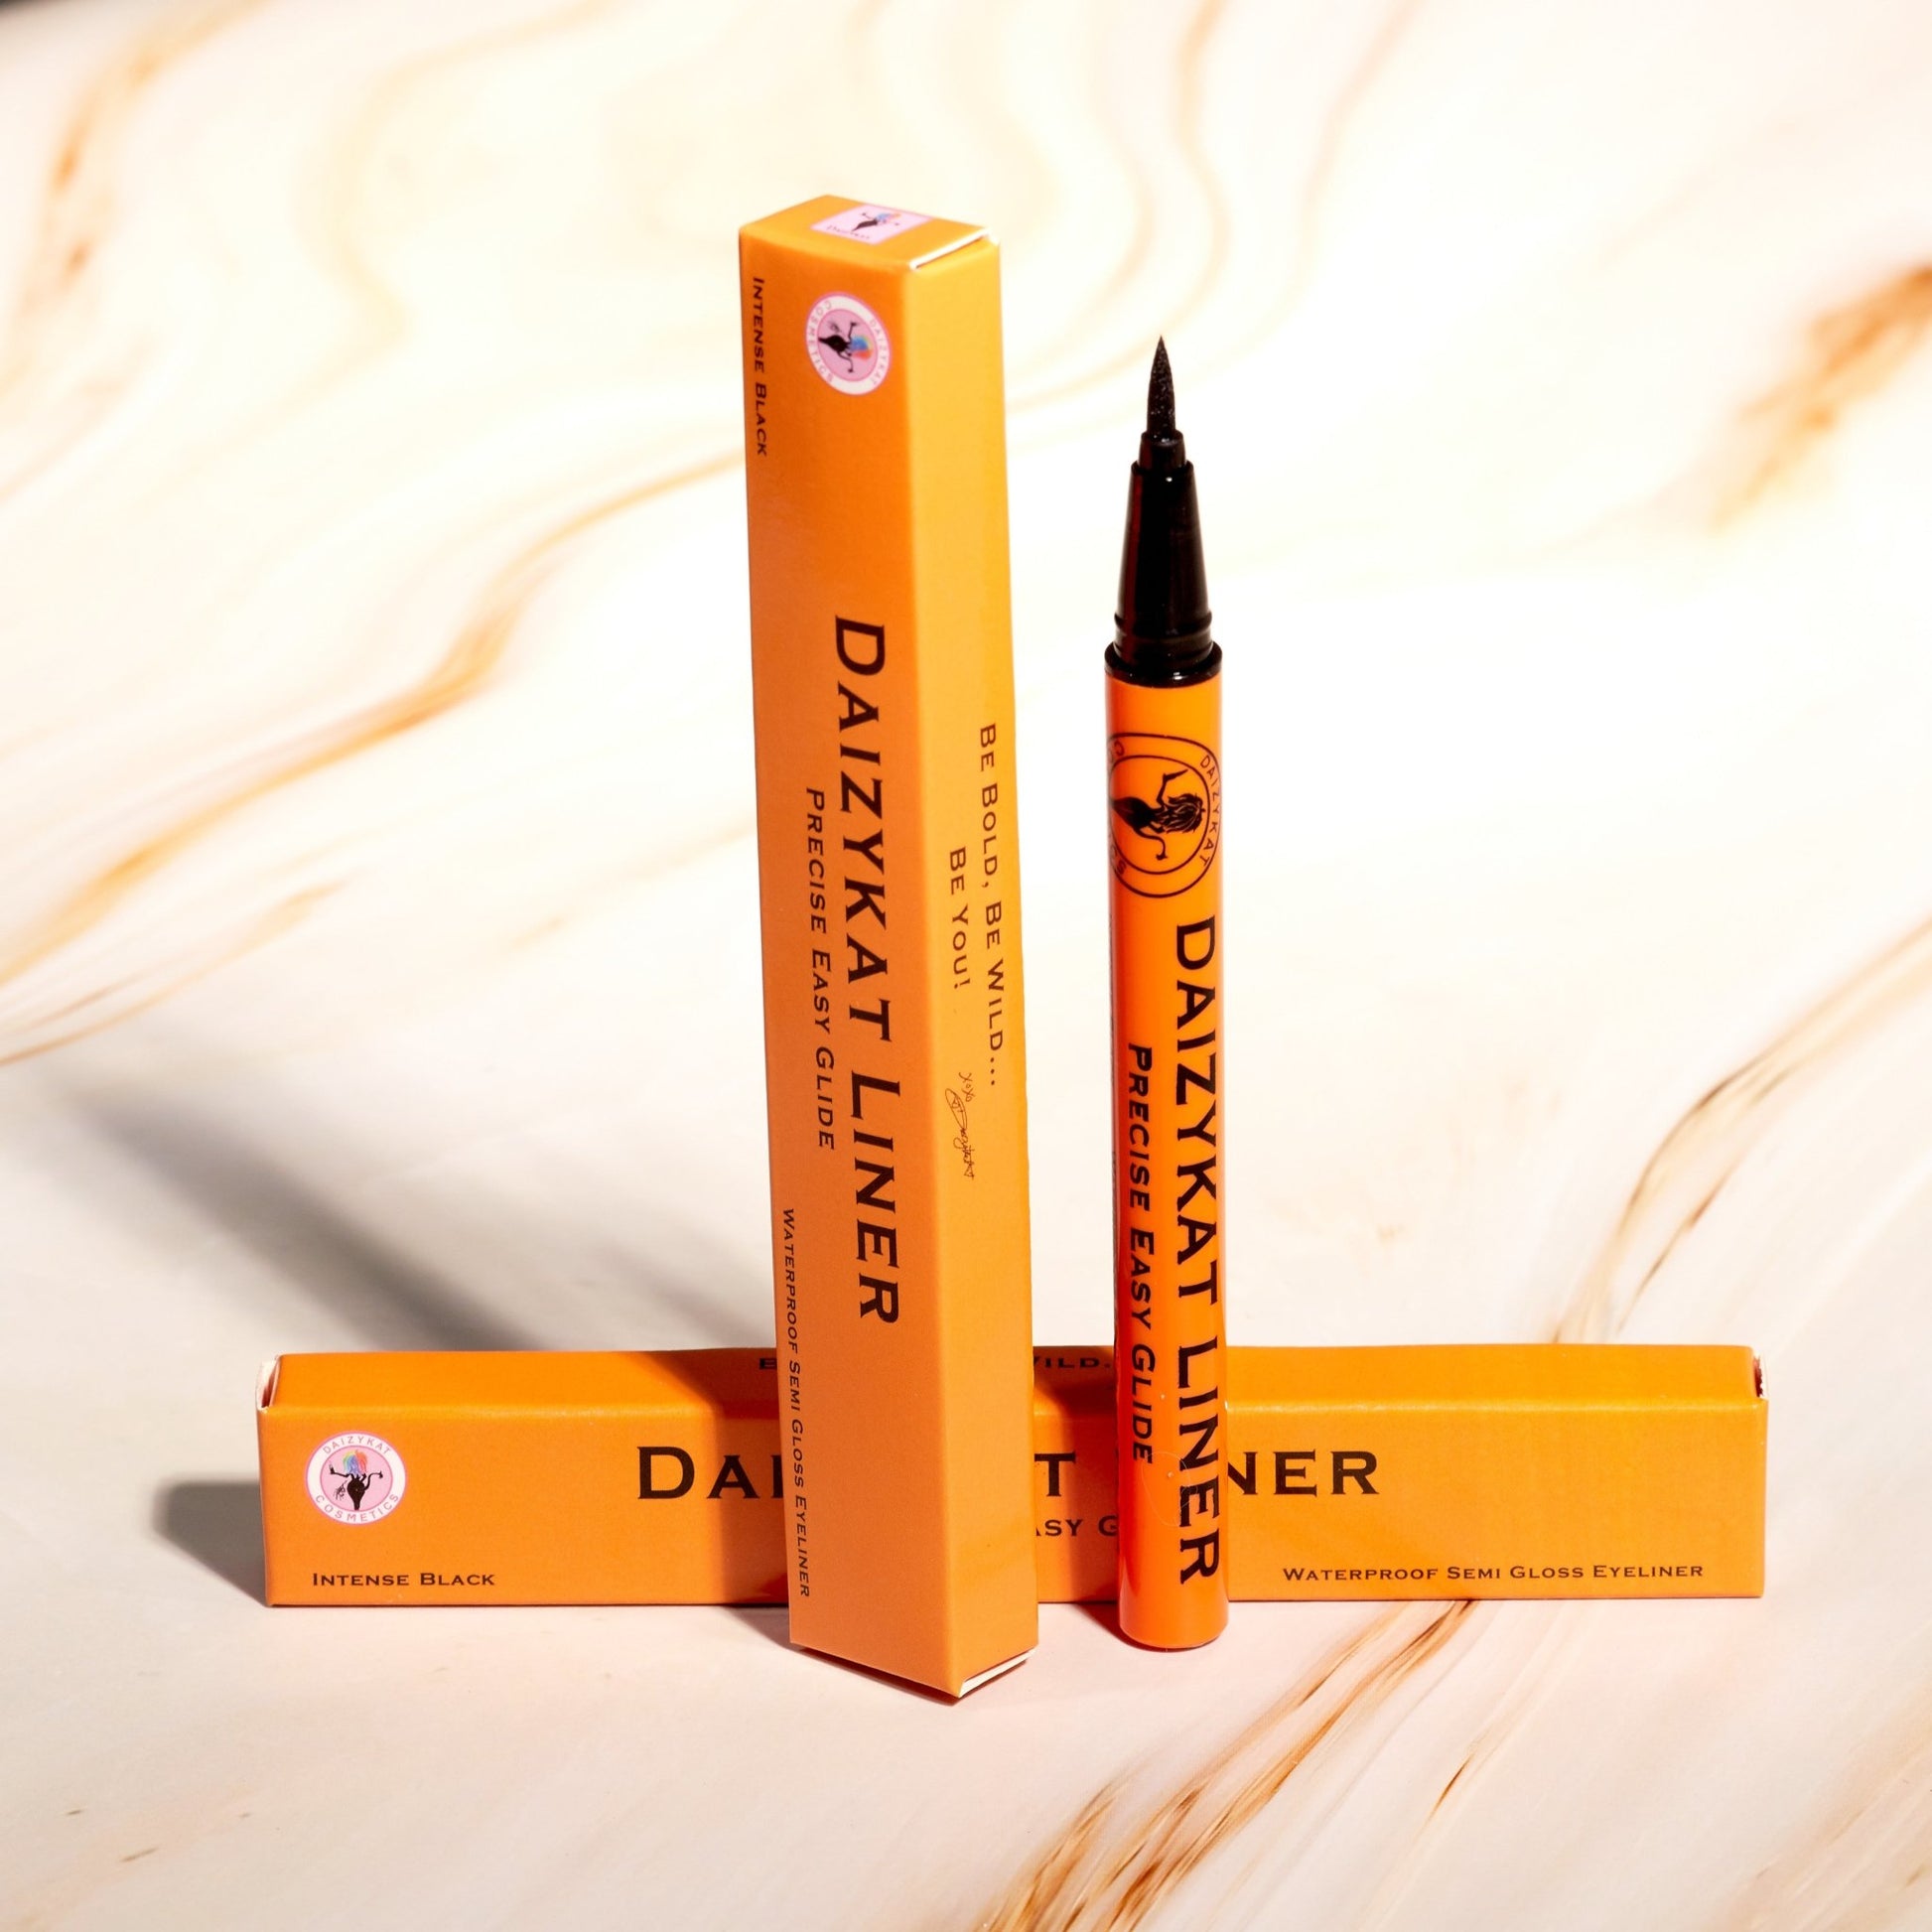 DaizyKat Waterproof Semi Gloss Eyeliner - Orange Tube - DaizyKat Cosmetics DaizyKat Waterproof Semi Gloss Eyeliner - Orange Tube DaizyKat Cosmetics eyeliner